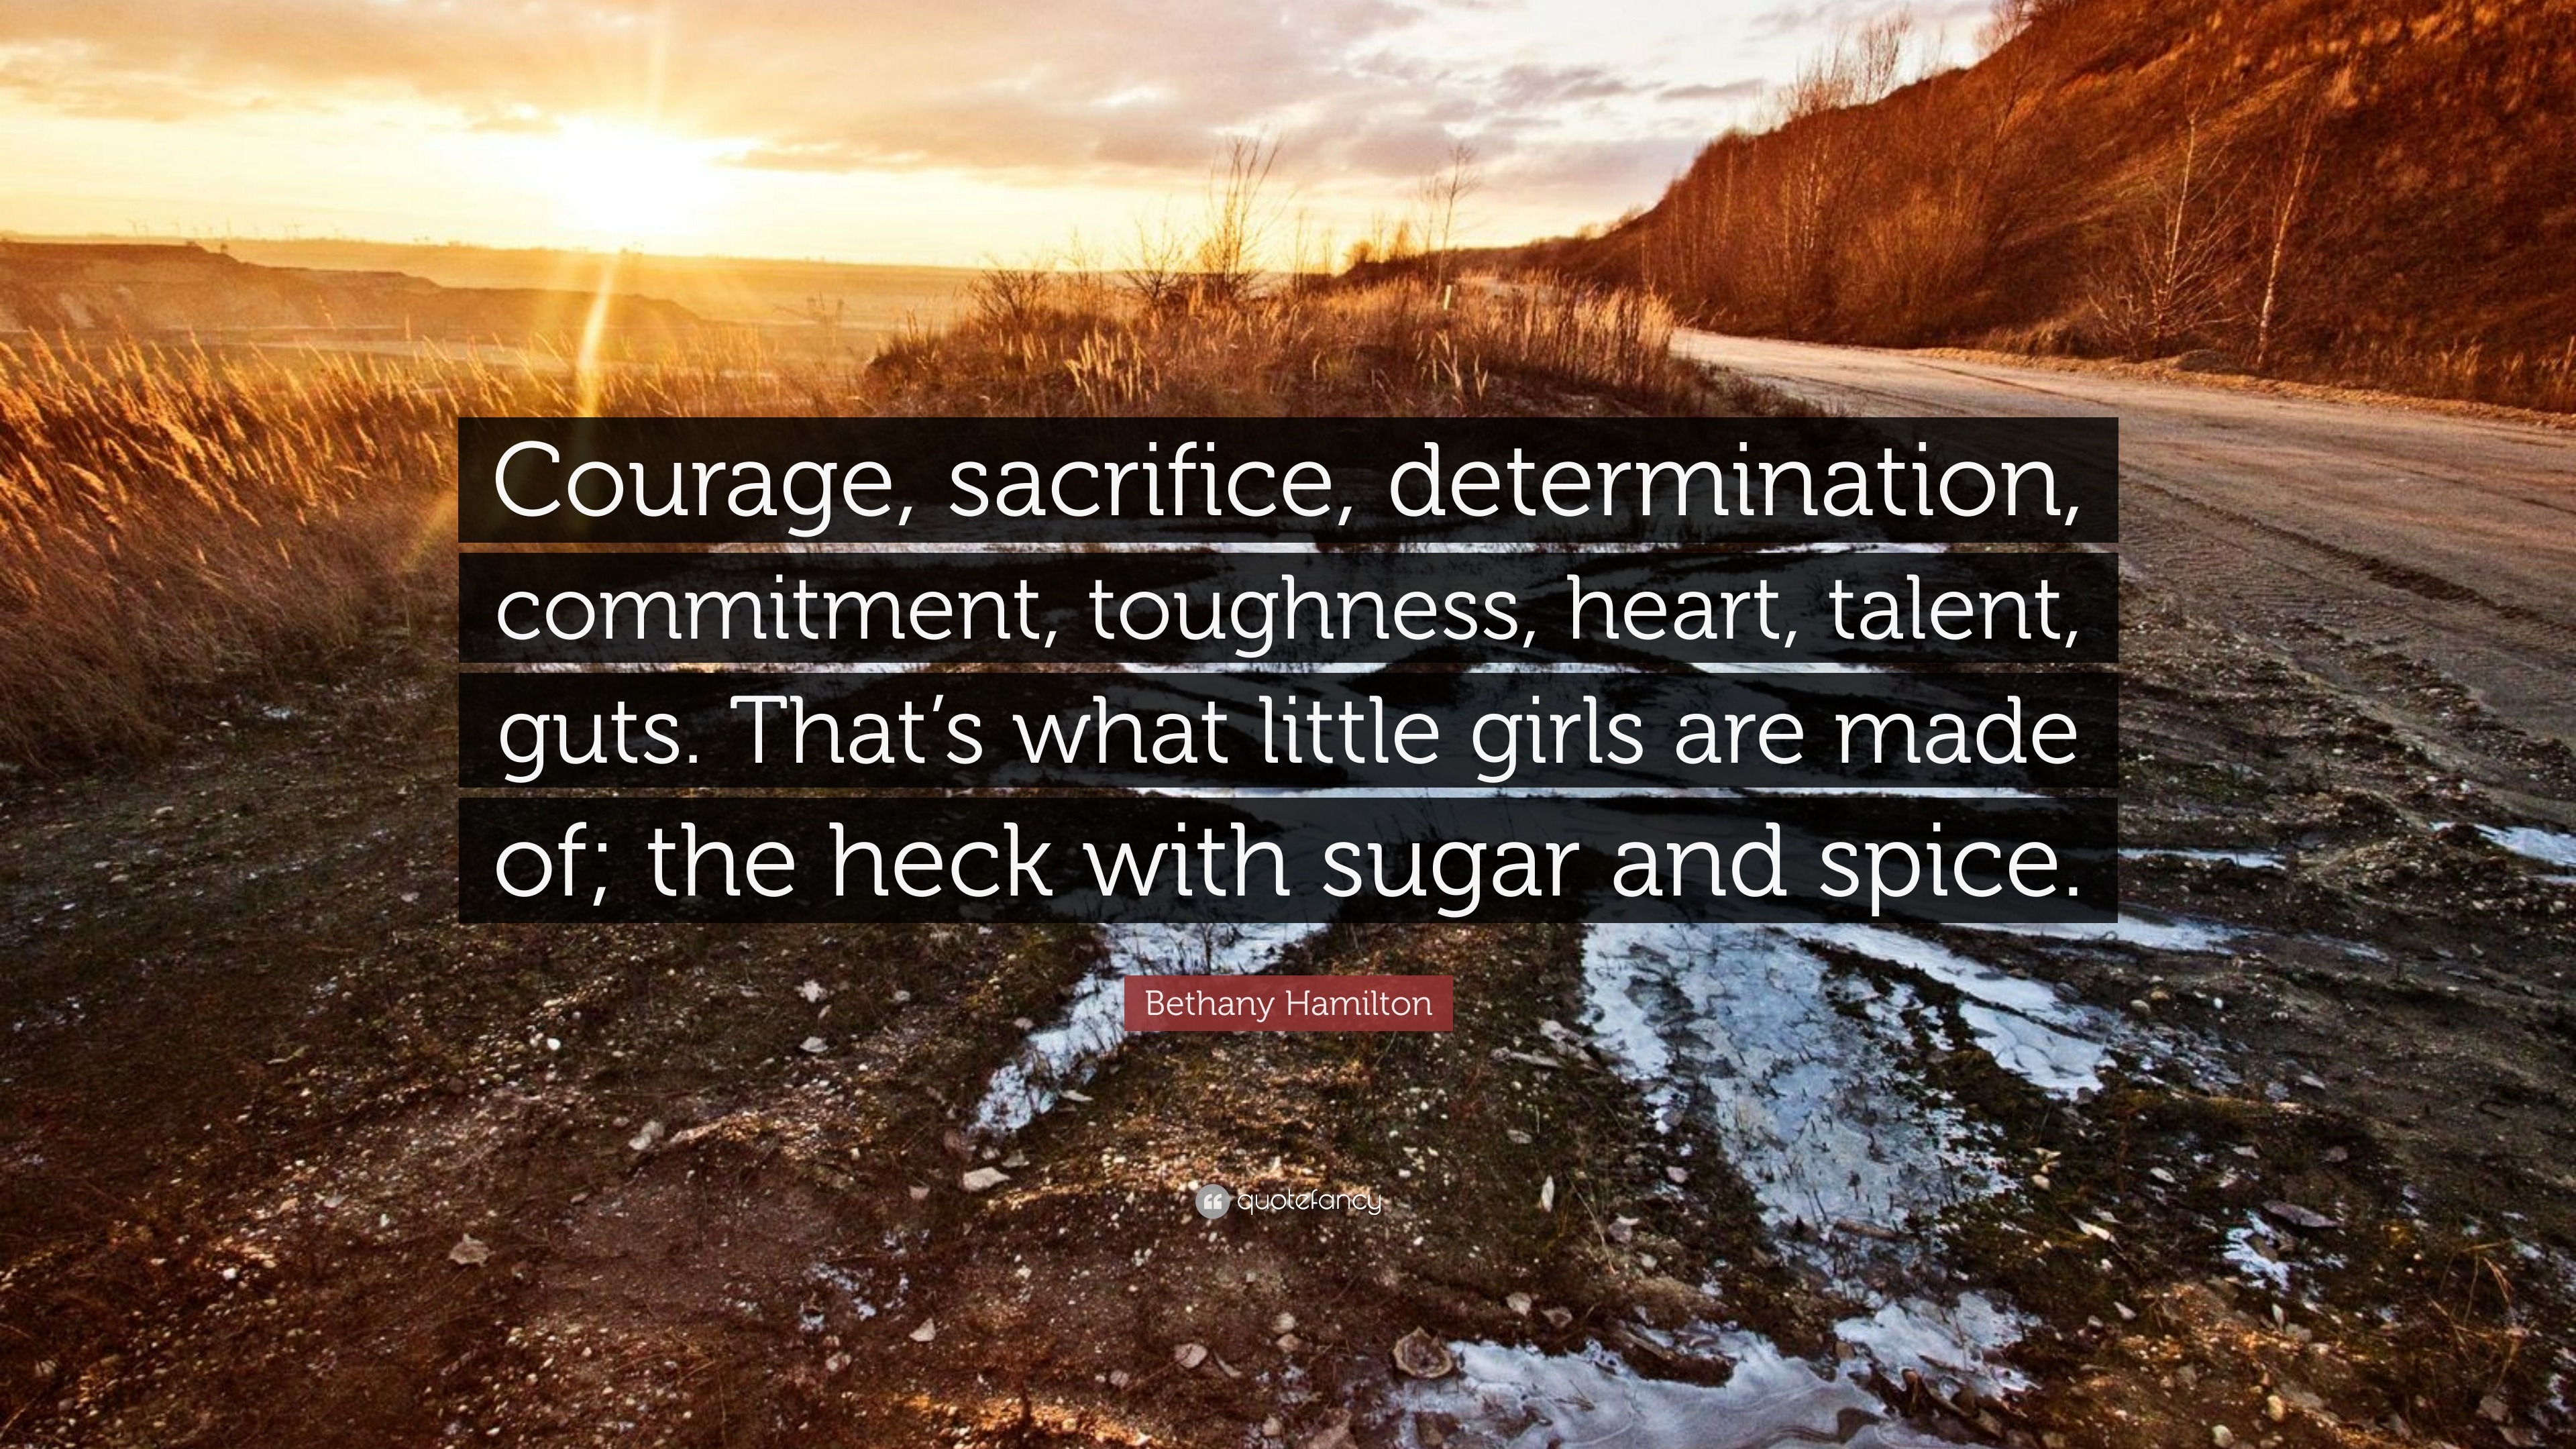 Bethany Hamilton Quote “Courage, sacrifice, determination